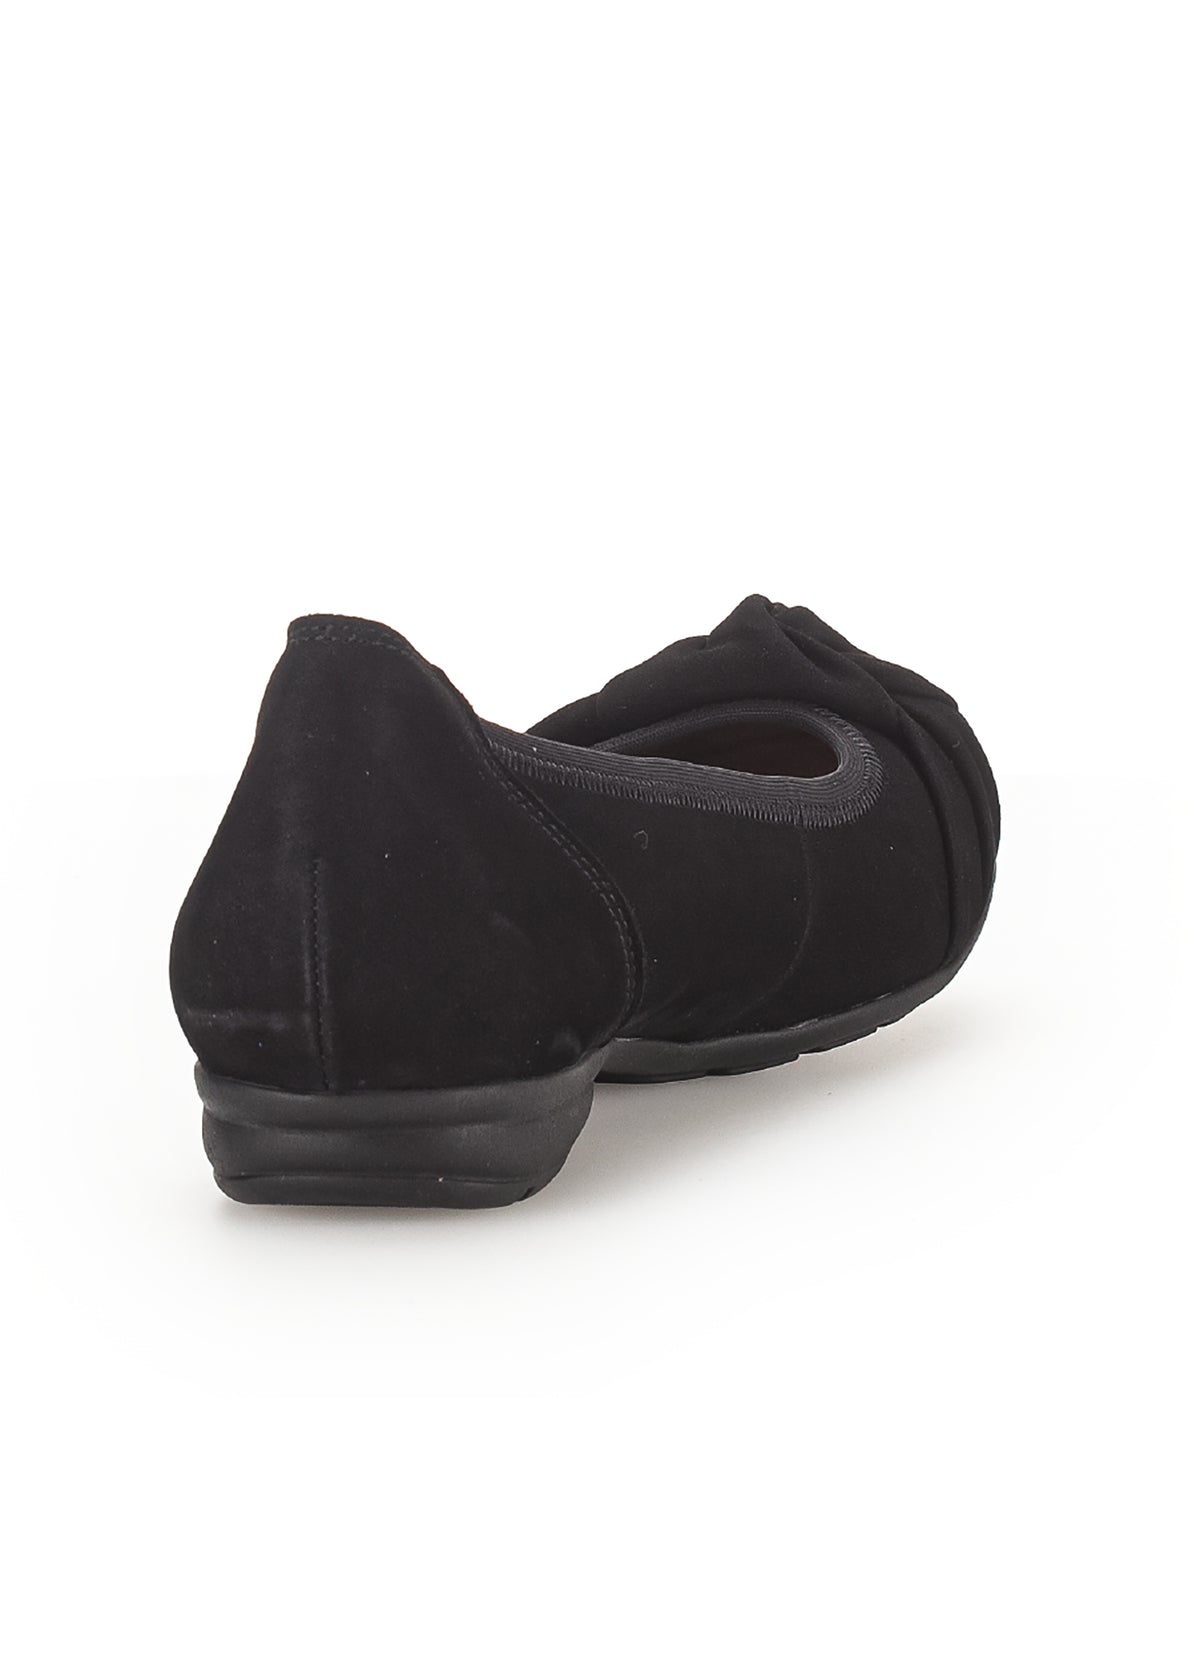 Ballerina shoes - black nubuck leather, knot decoration